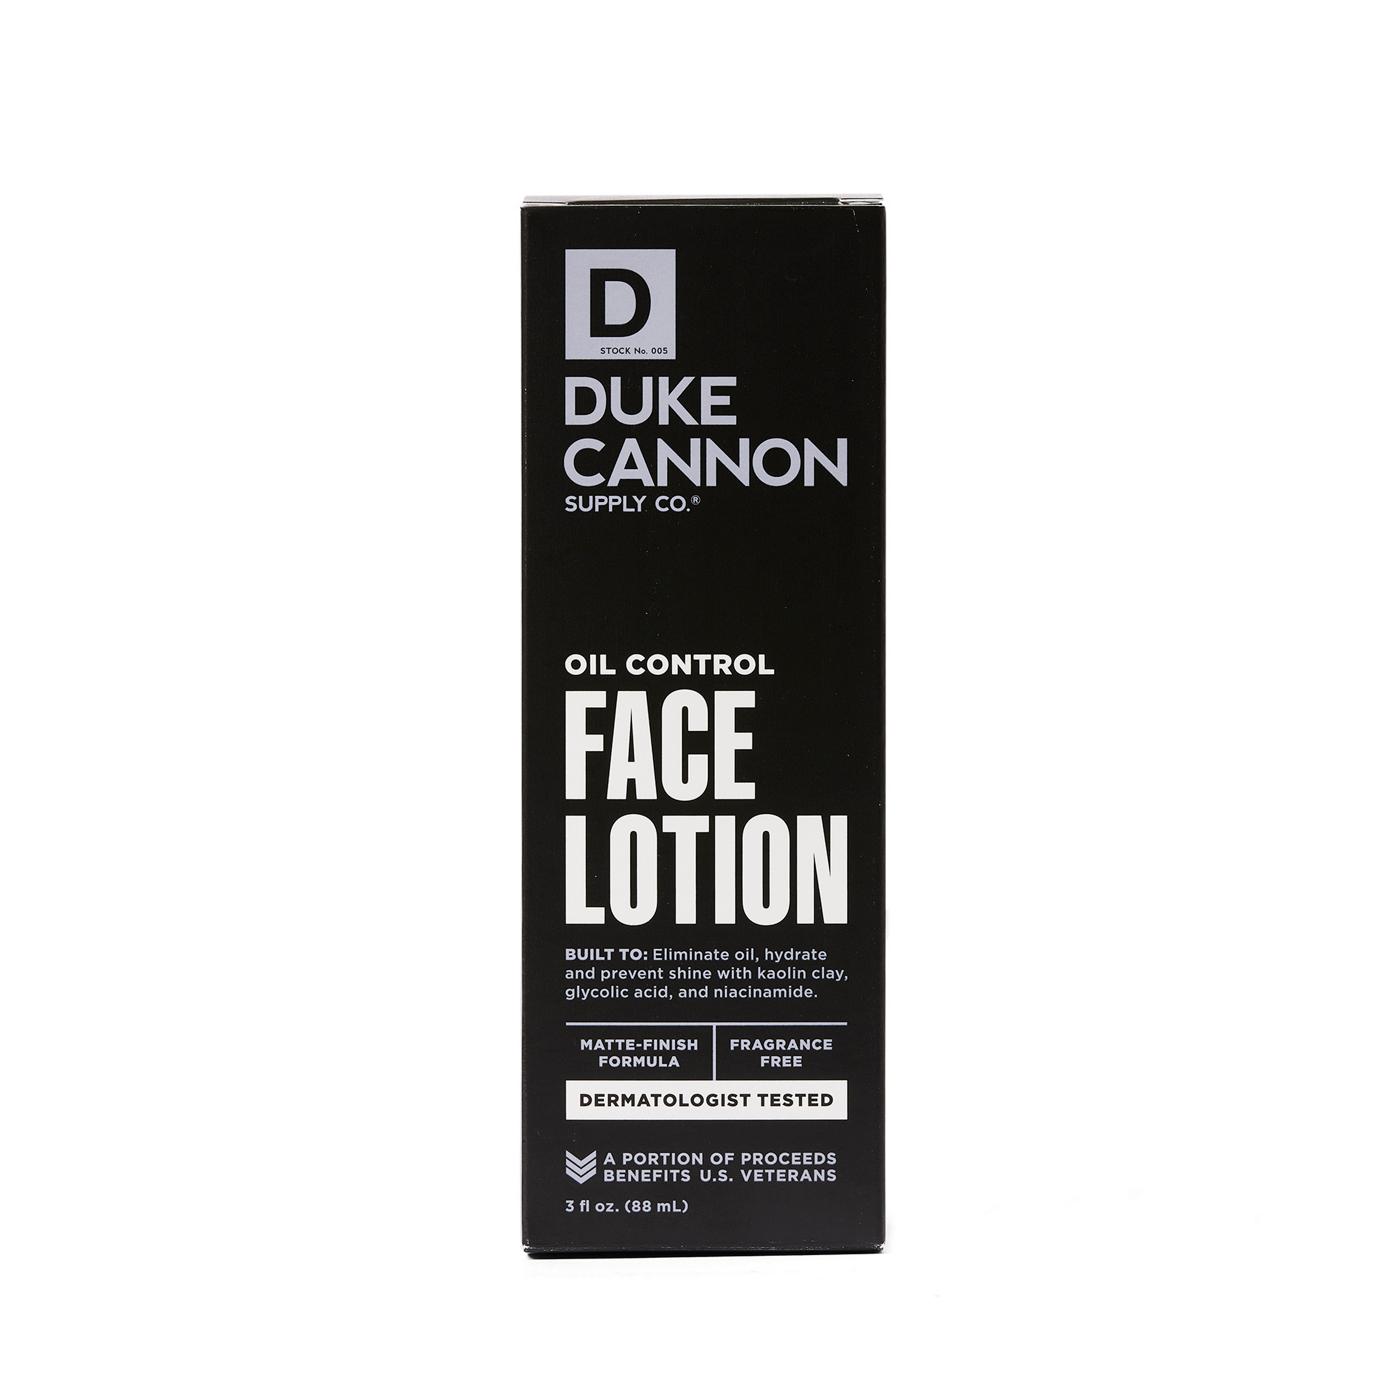 Duke Cannon Oil Control Face Lotion; image 1 of 4